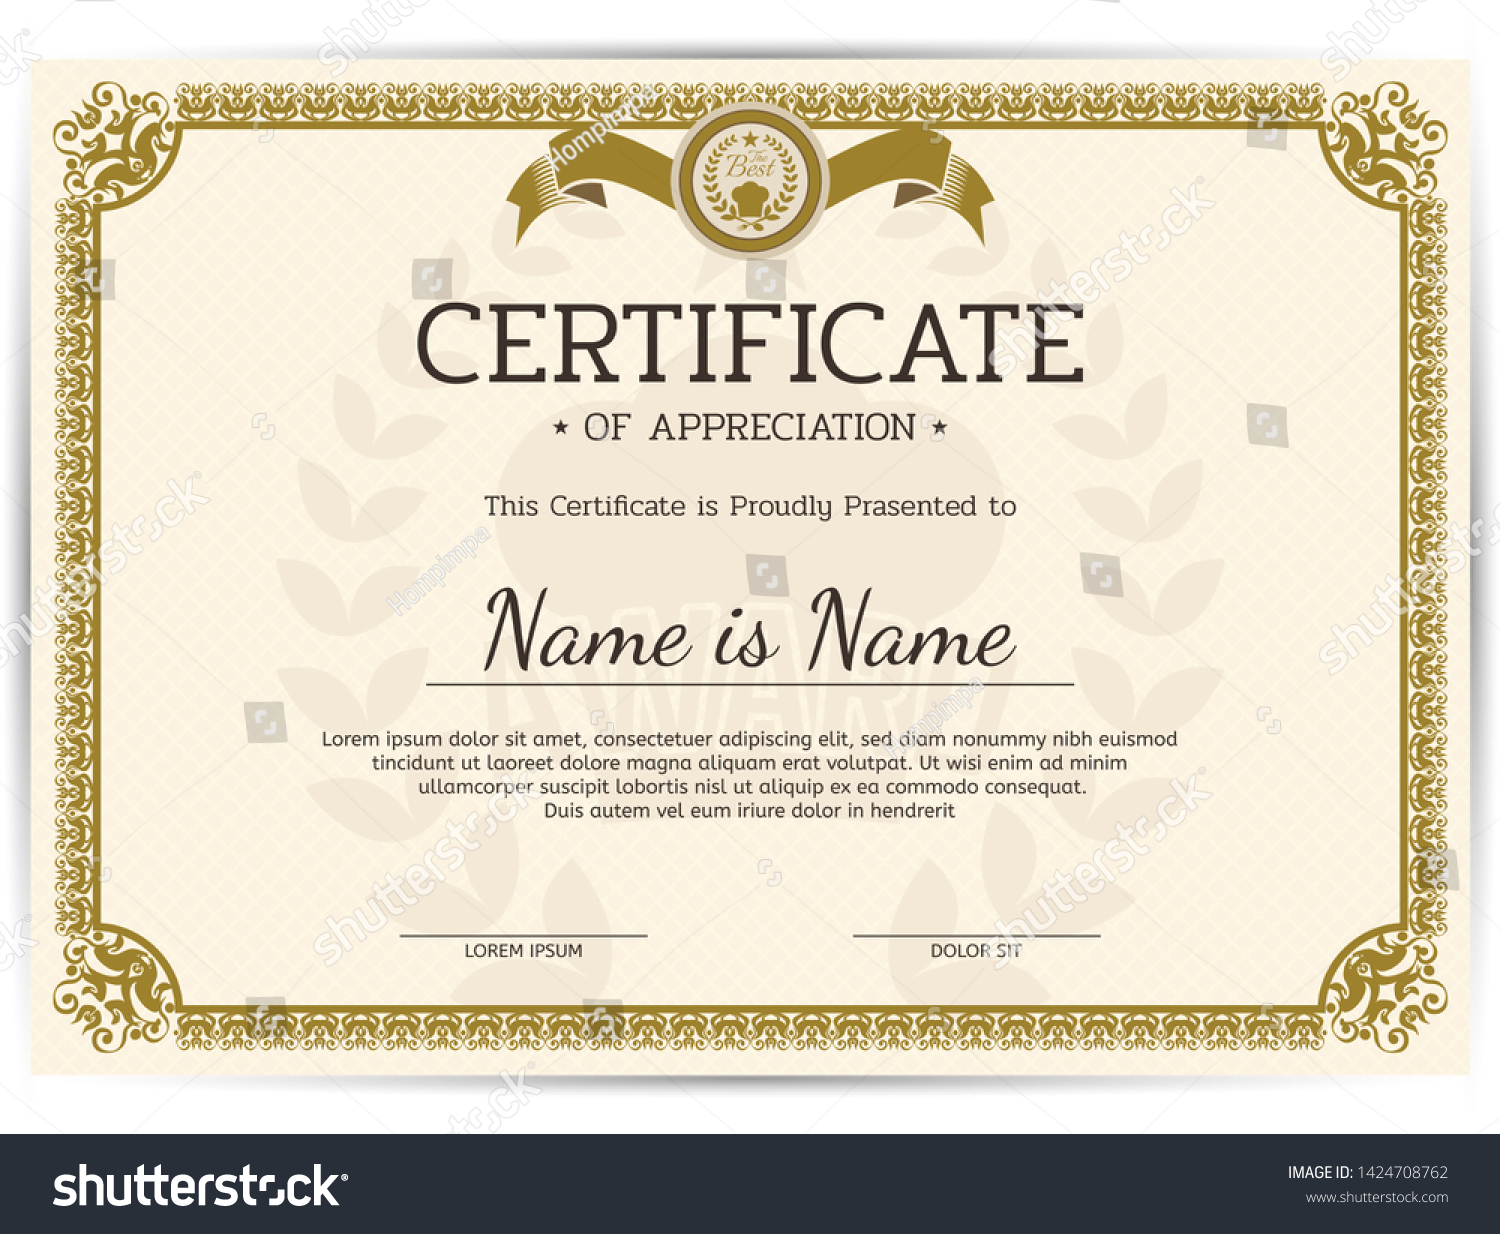 Vintage Certificate Appreciation Award Template Template Stock For Award Certificate Border Template